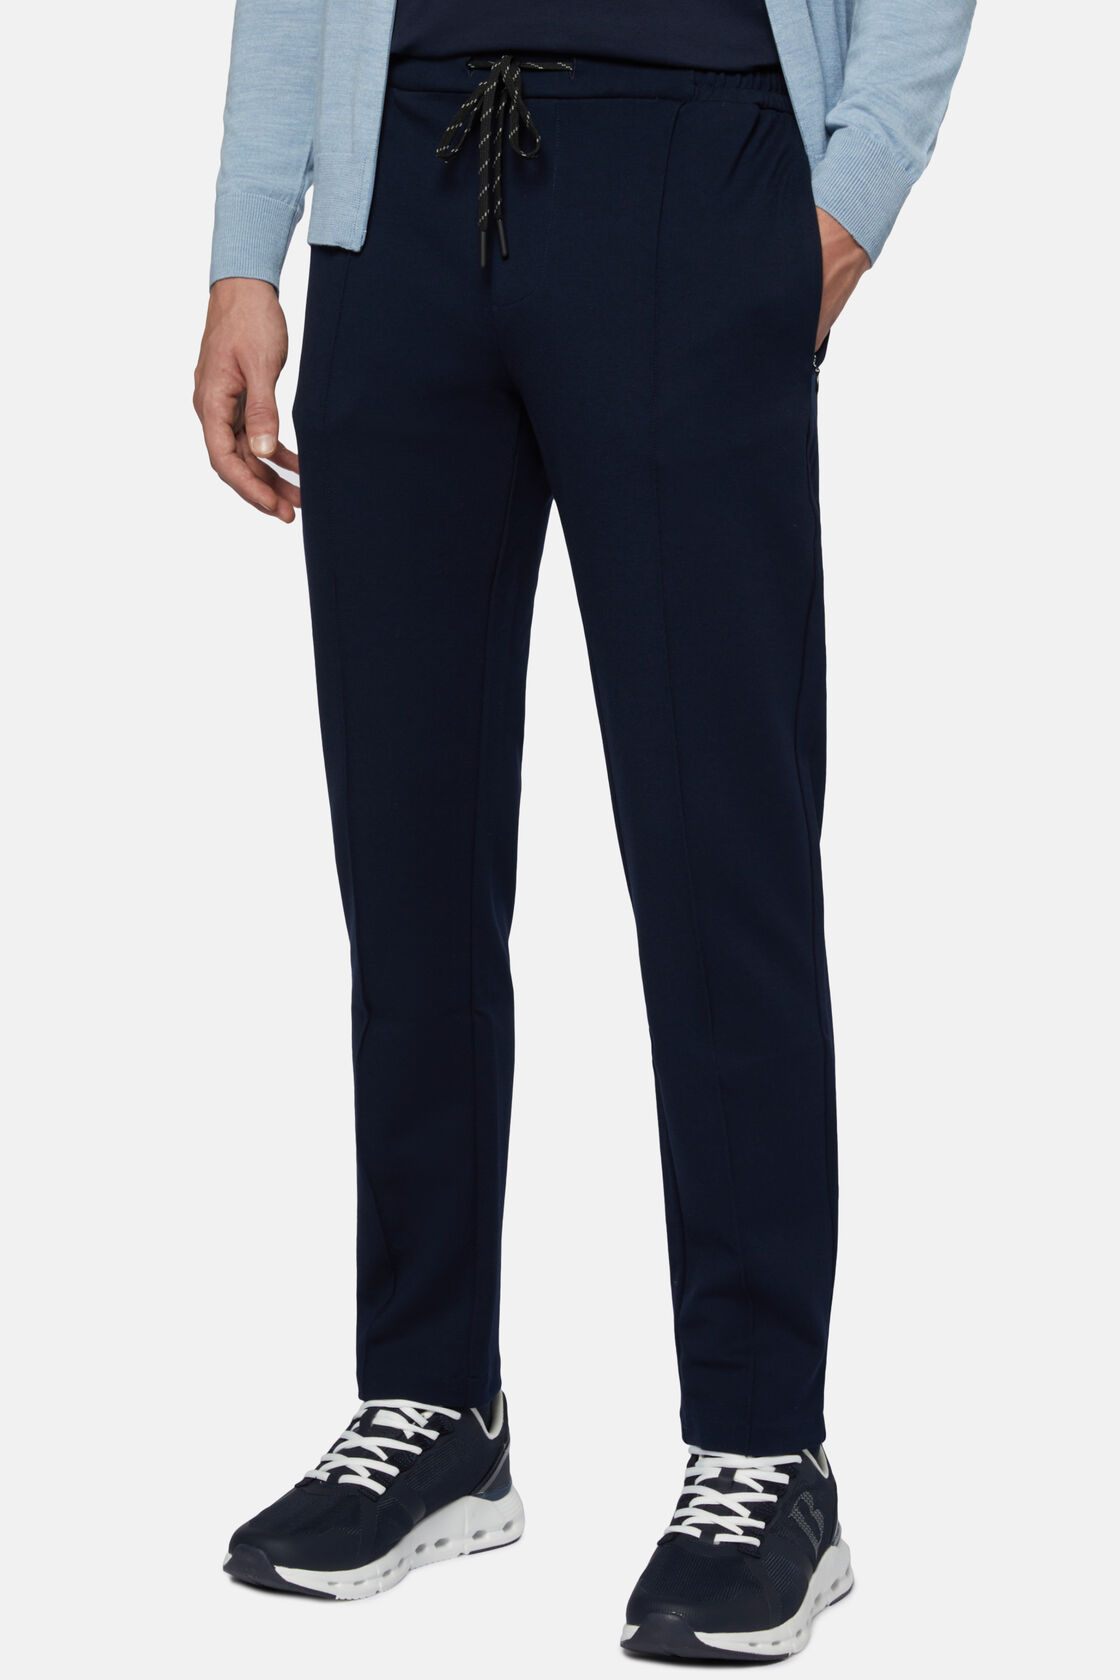 Stretch Interlock Technical Fabric Pants, Navy blue, hi-res